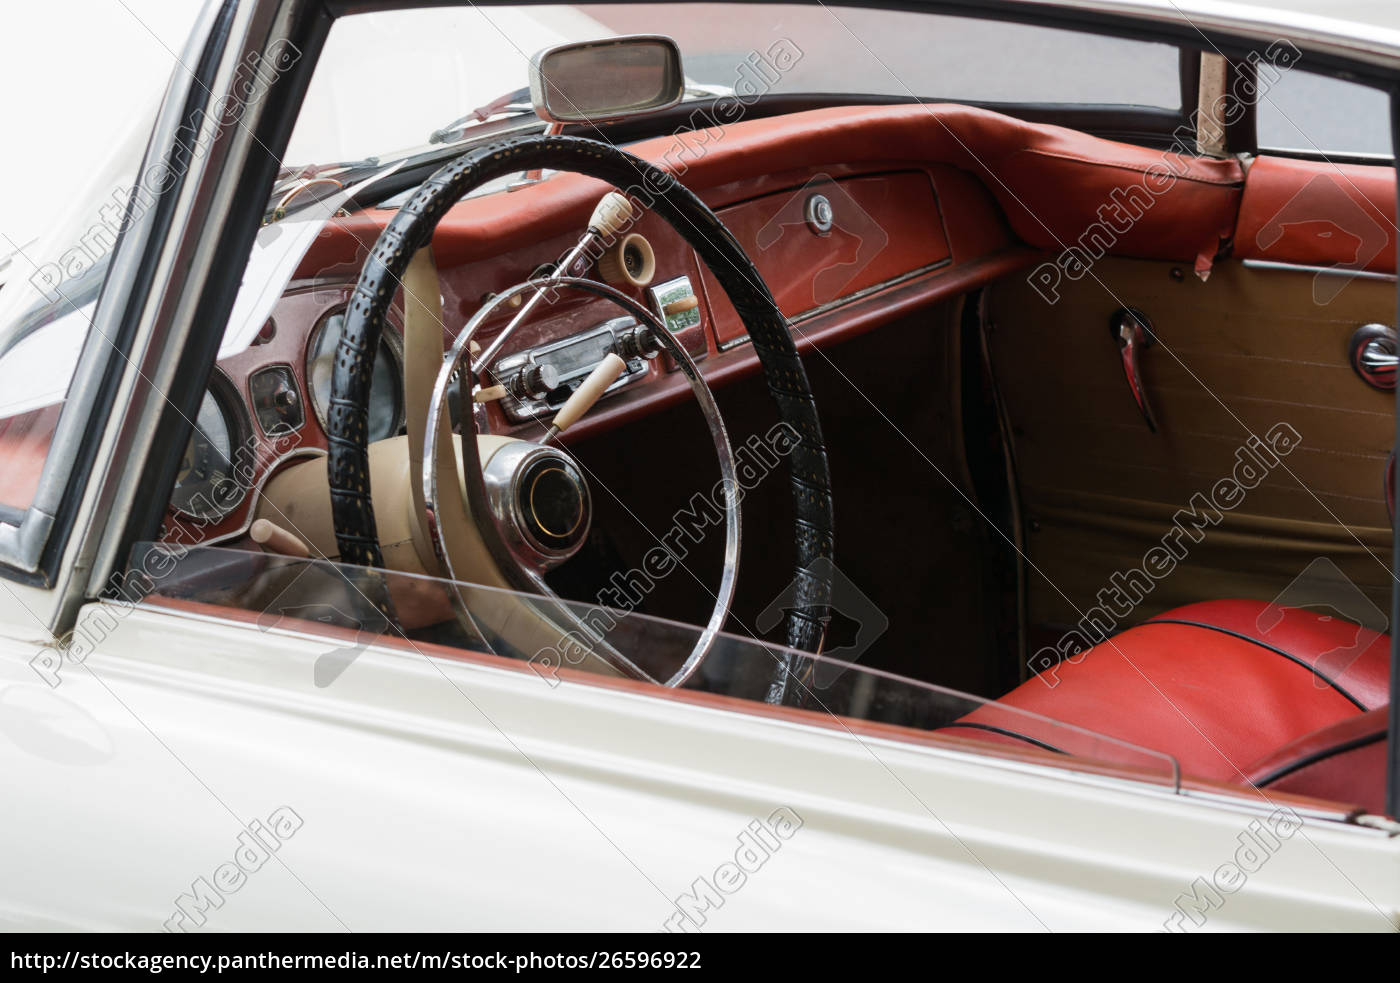 Stock Bild 26596922 Interior View Of Vintage Car